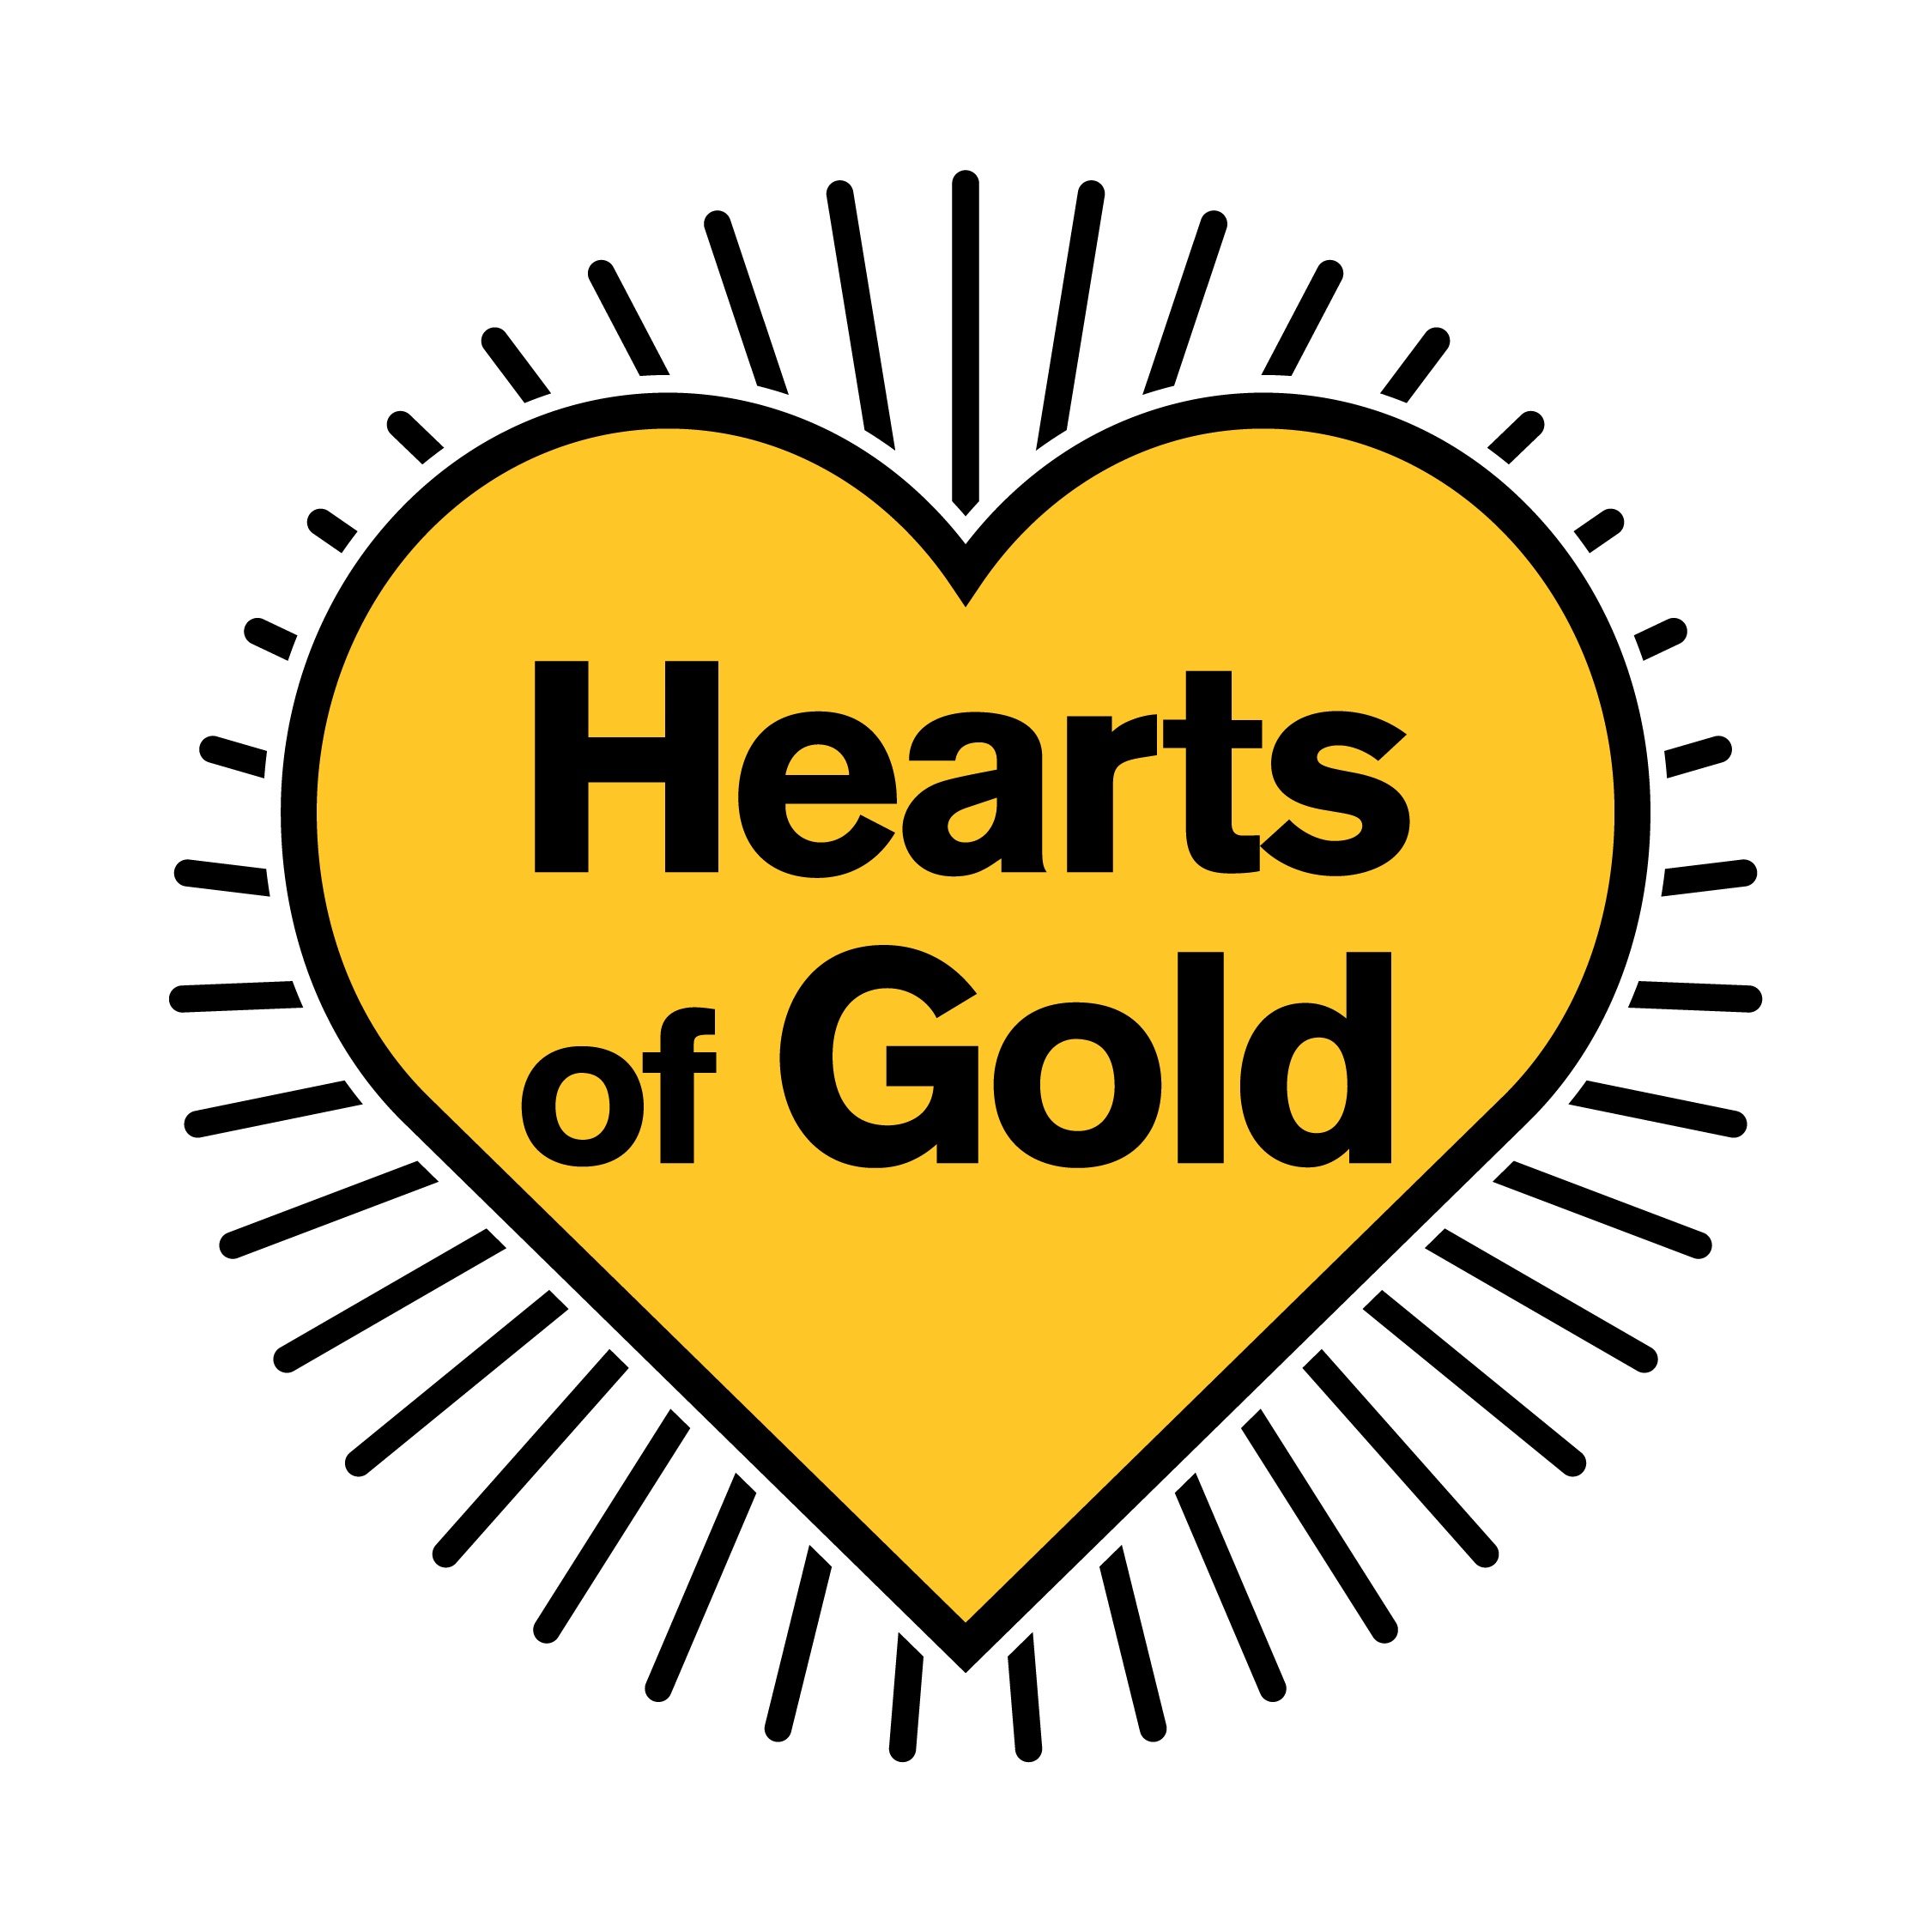 Hearts of Gold lockup